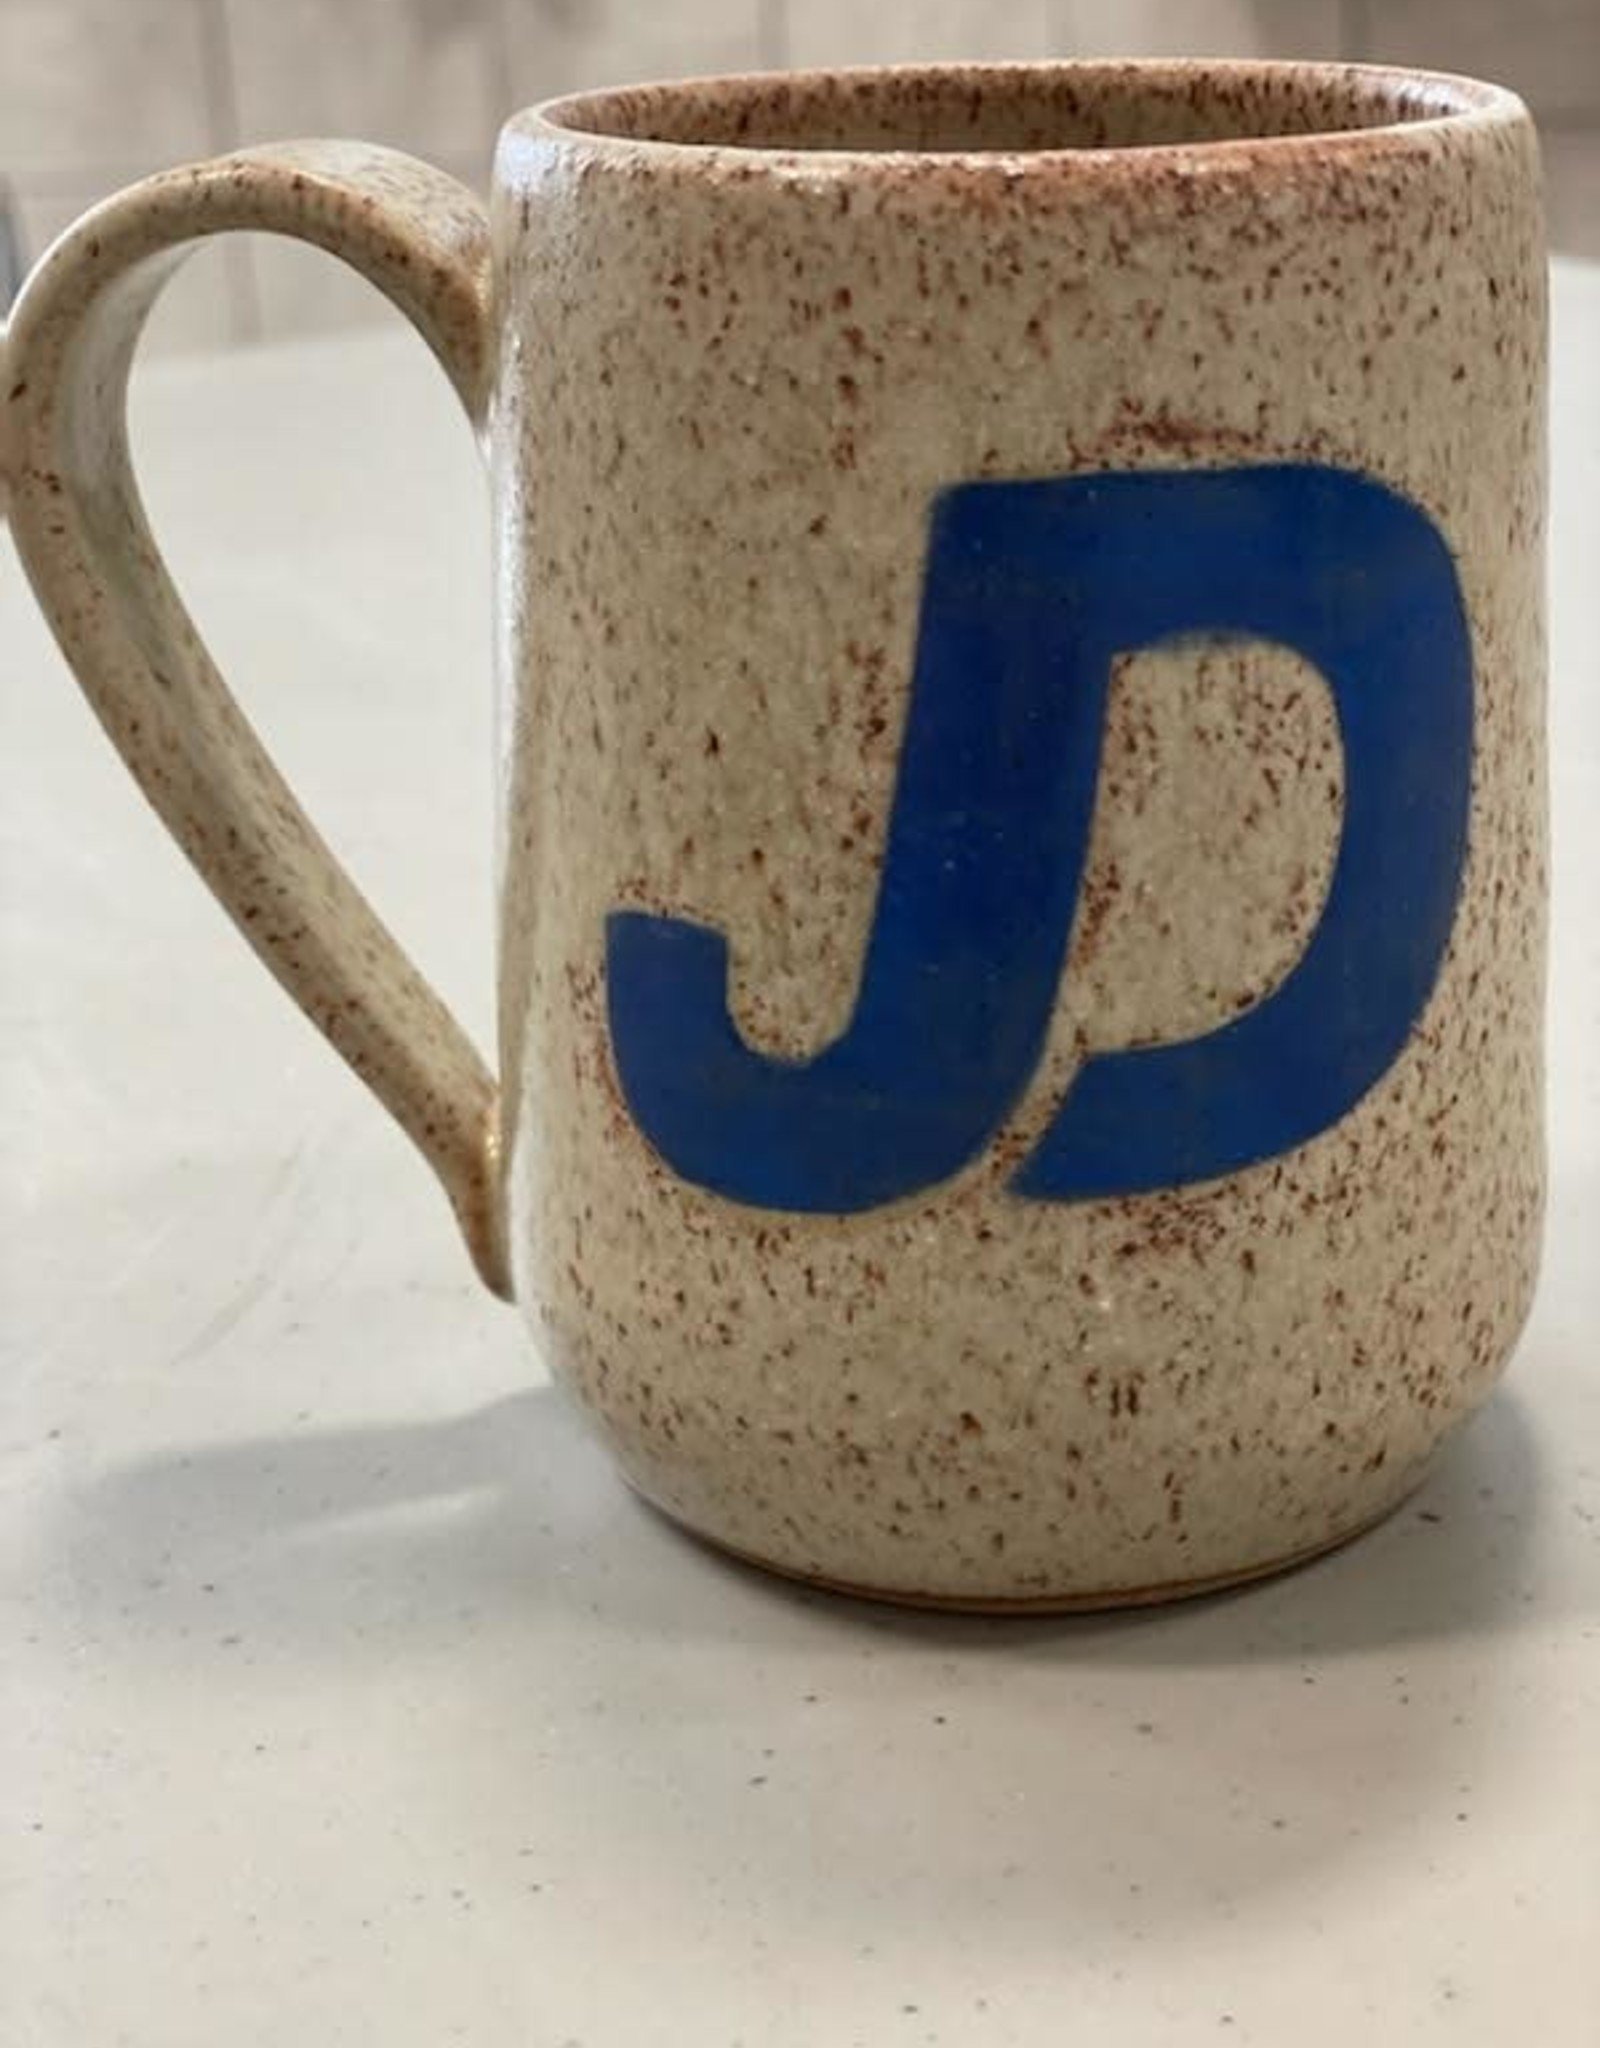 NON-UNIFORM JD Handcrafted Ceramic Mug - Made by JD's Art Teacher, Jenni Eames